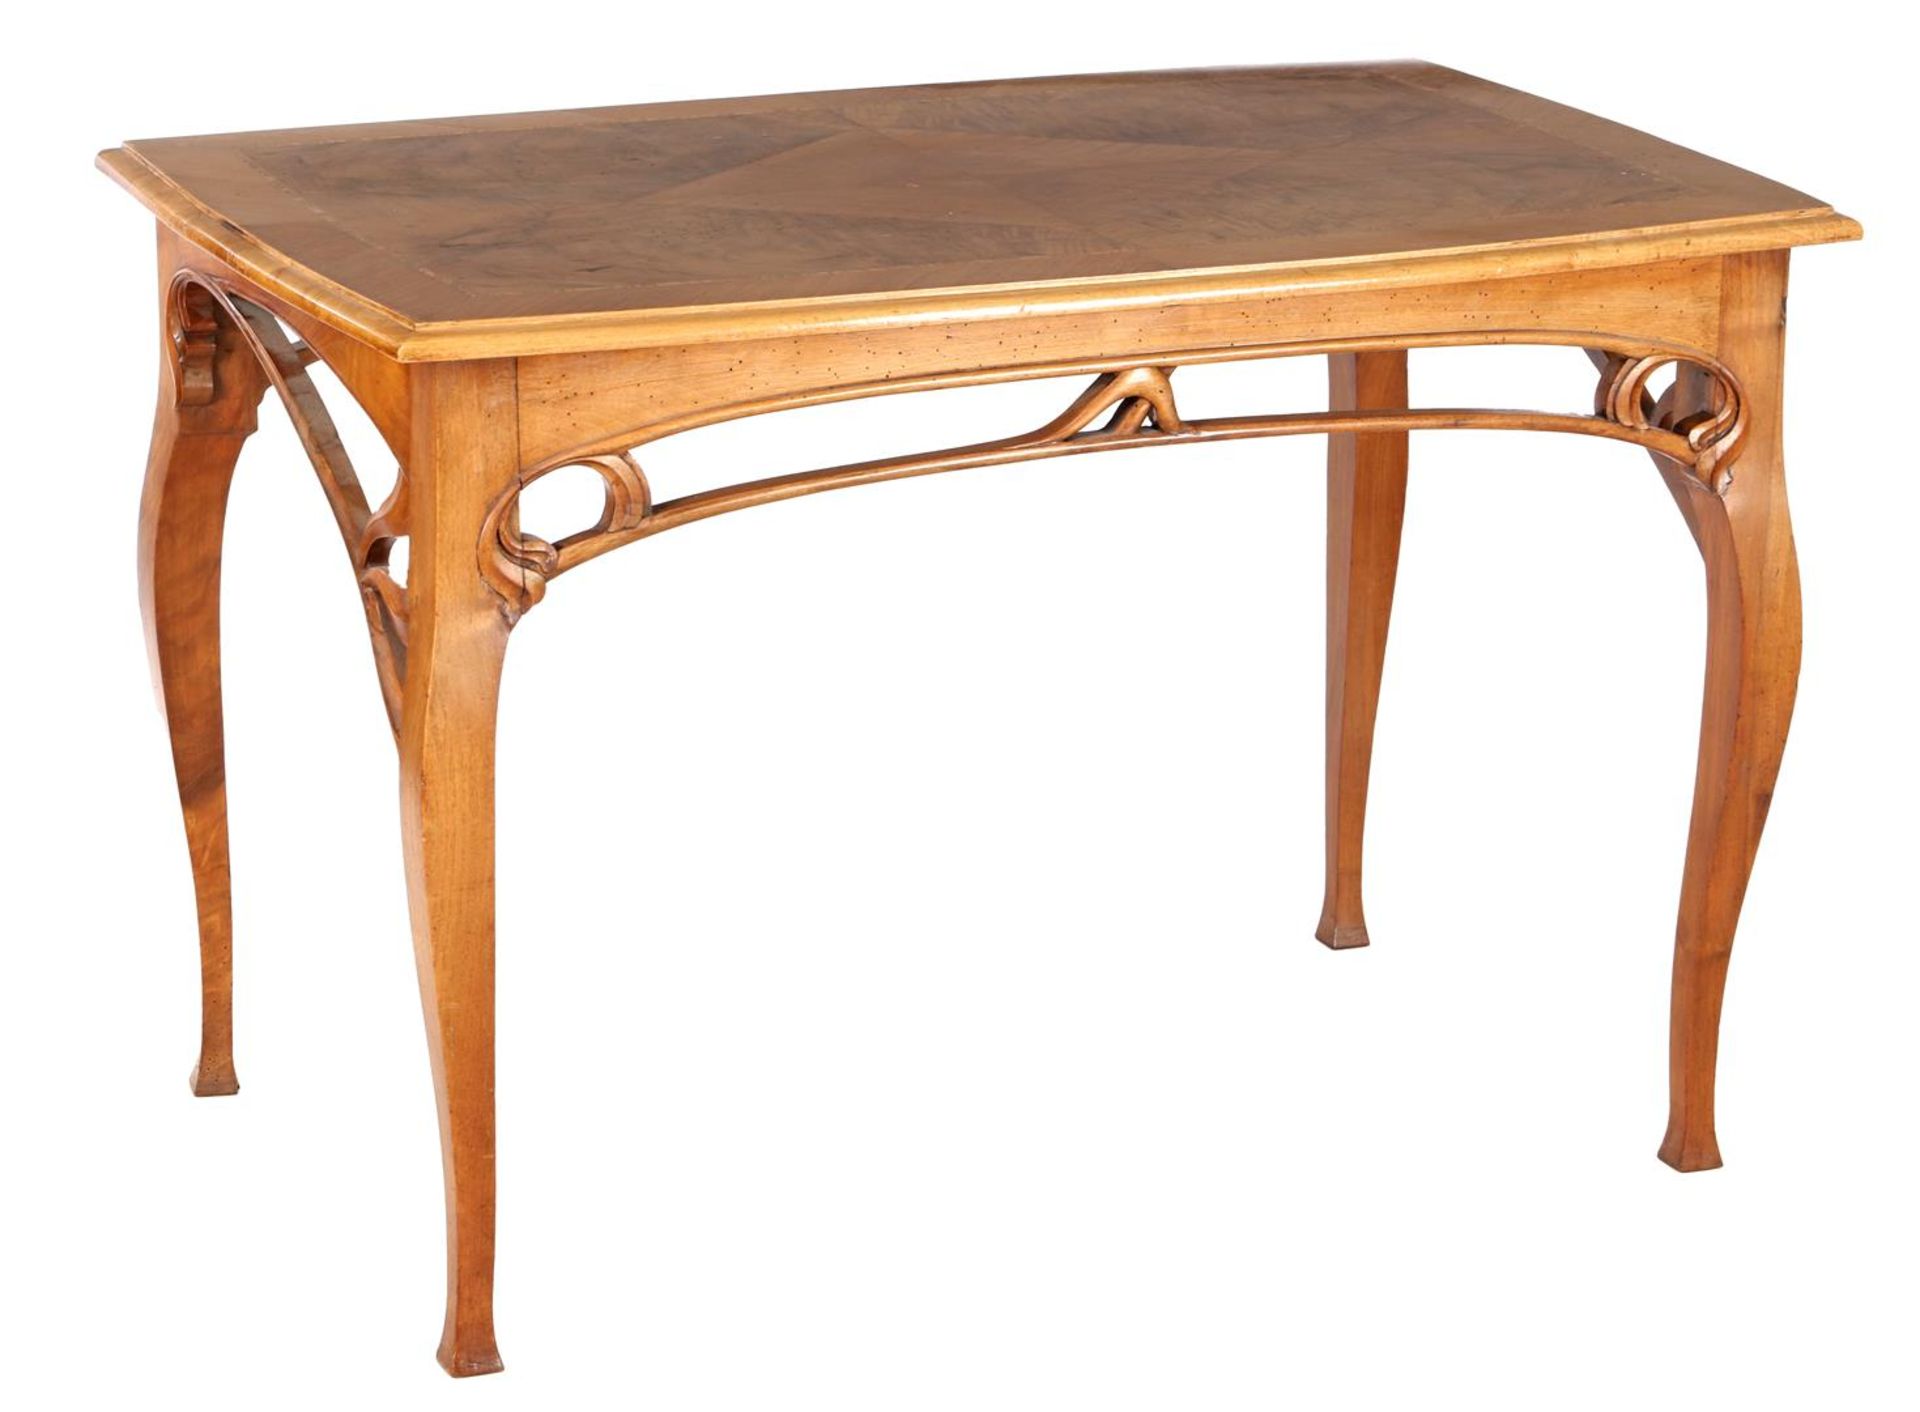 Walnut Art Nouveau table